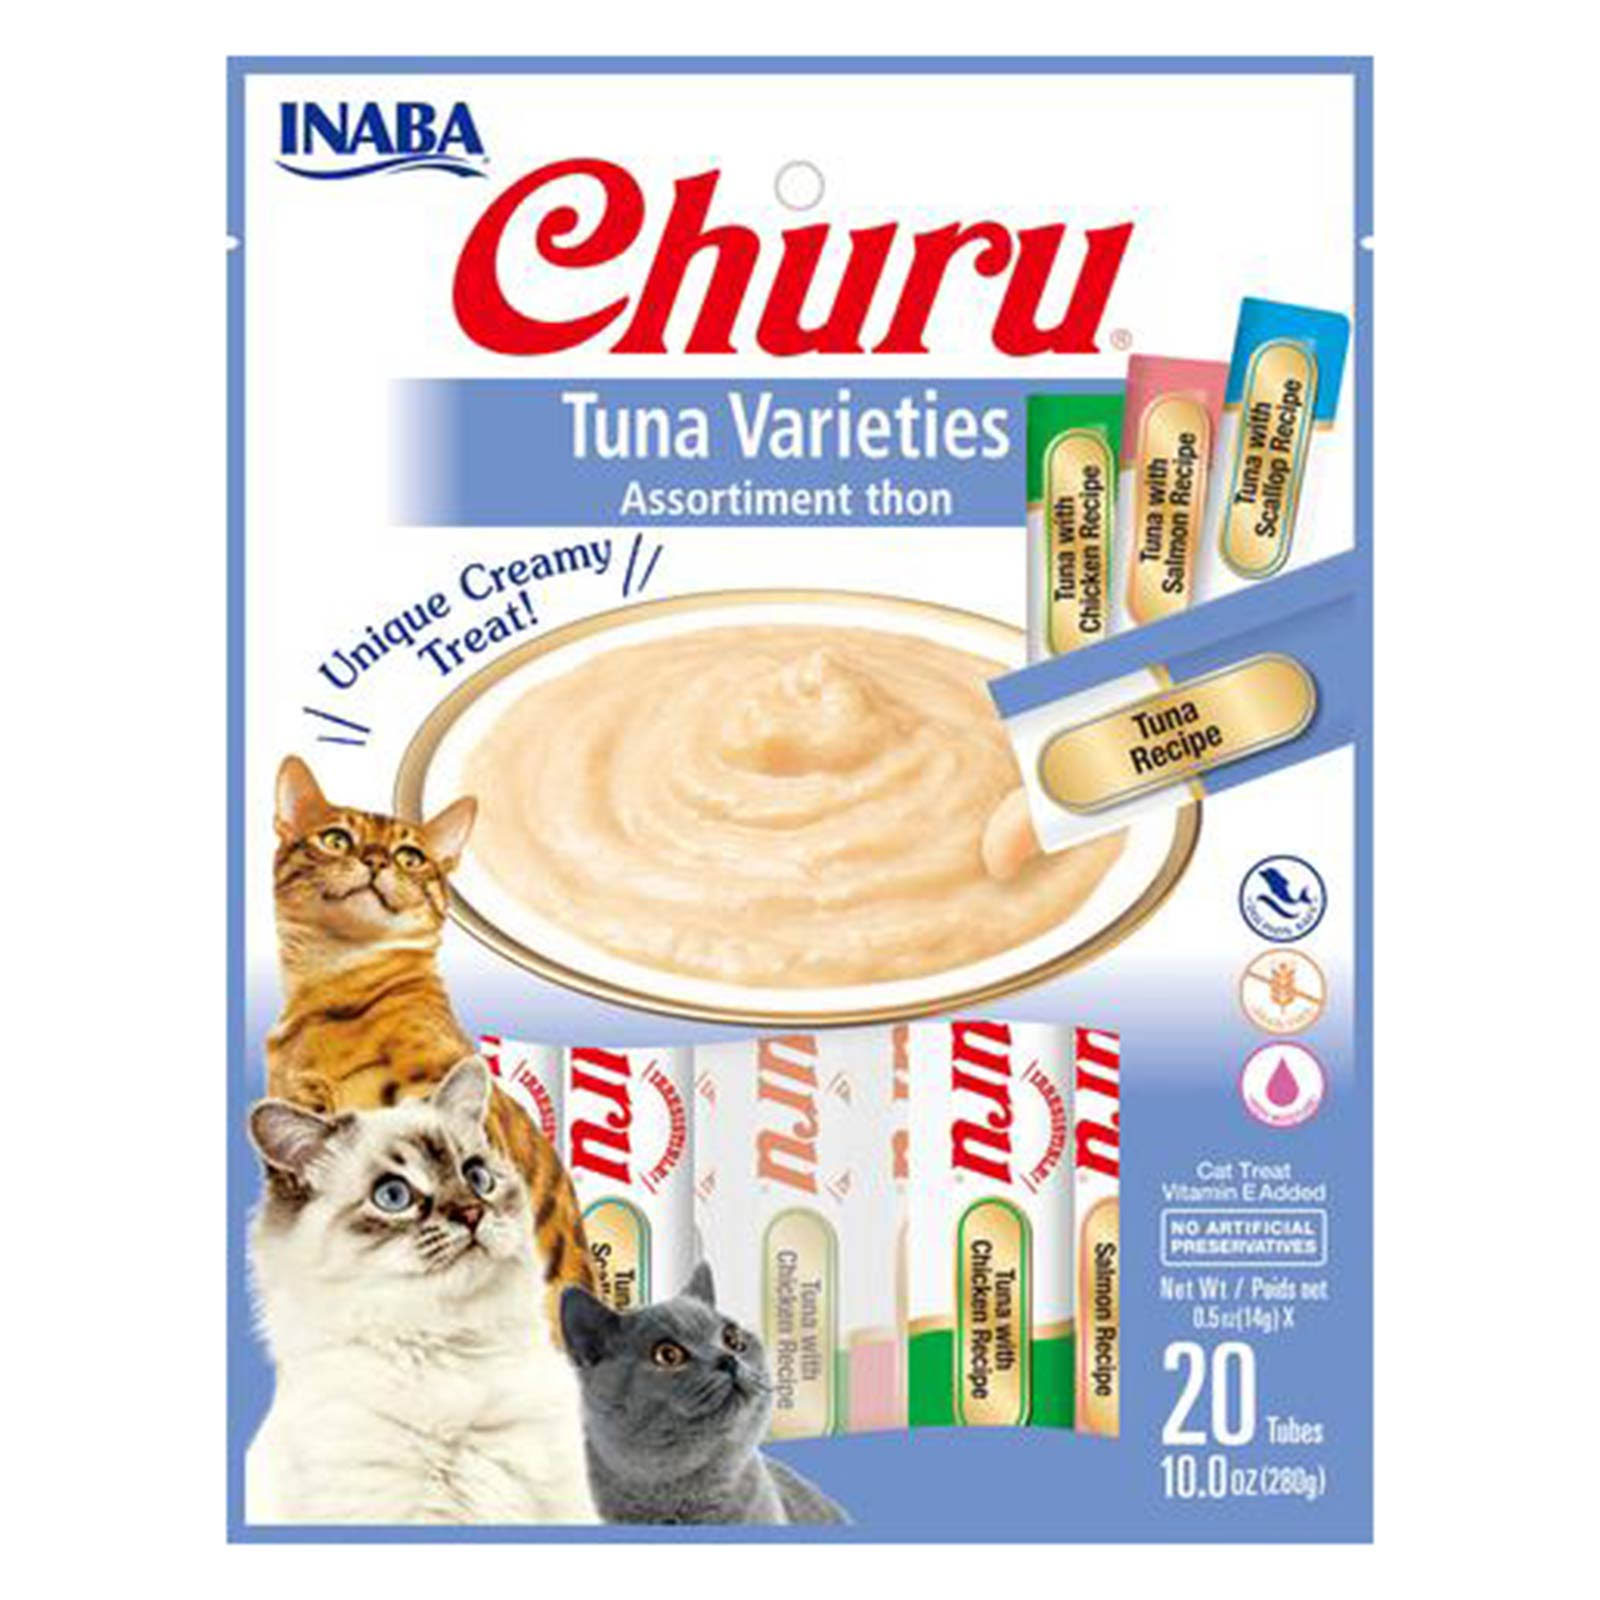 Inaba Churu Creamy Puree Tuna Varieties Cat Treat Tubes 20 Pack 280gm